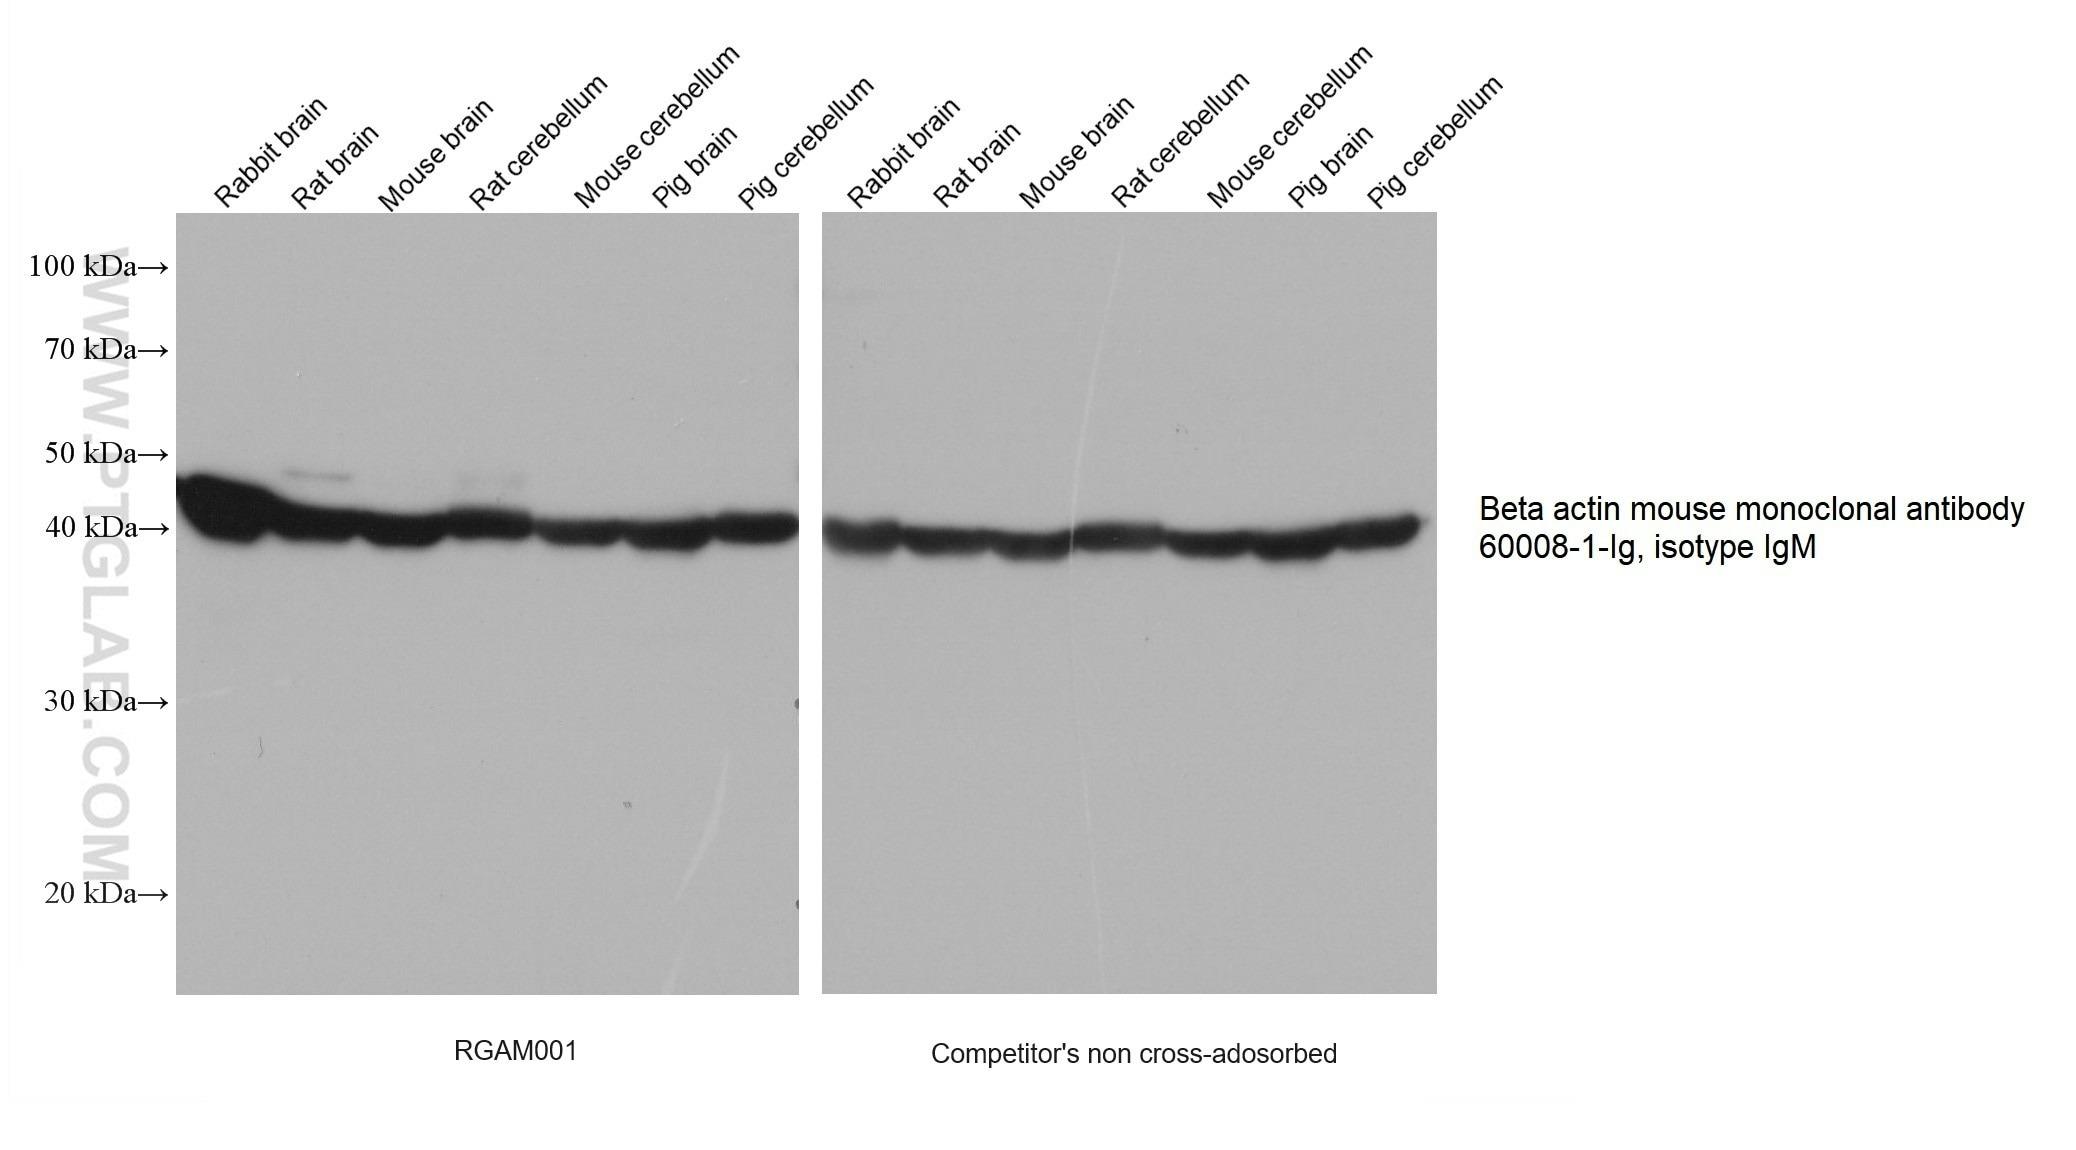 Multi-rAb HRP標識抗マウスIgG二次抗体と競合他社製品（非吸着処理製品）を用いたEFTUD2の化学発光ウェスタンブロット（WB）結果の比較